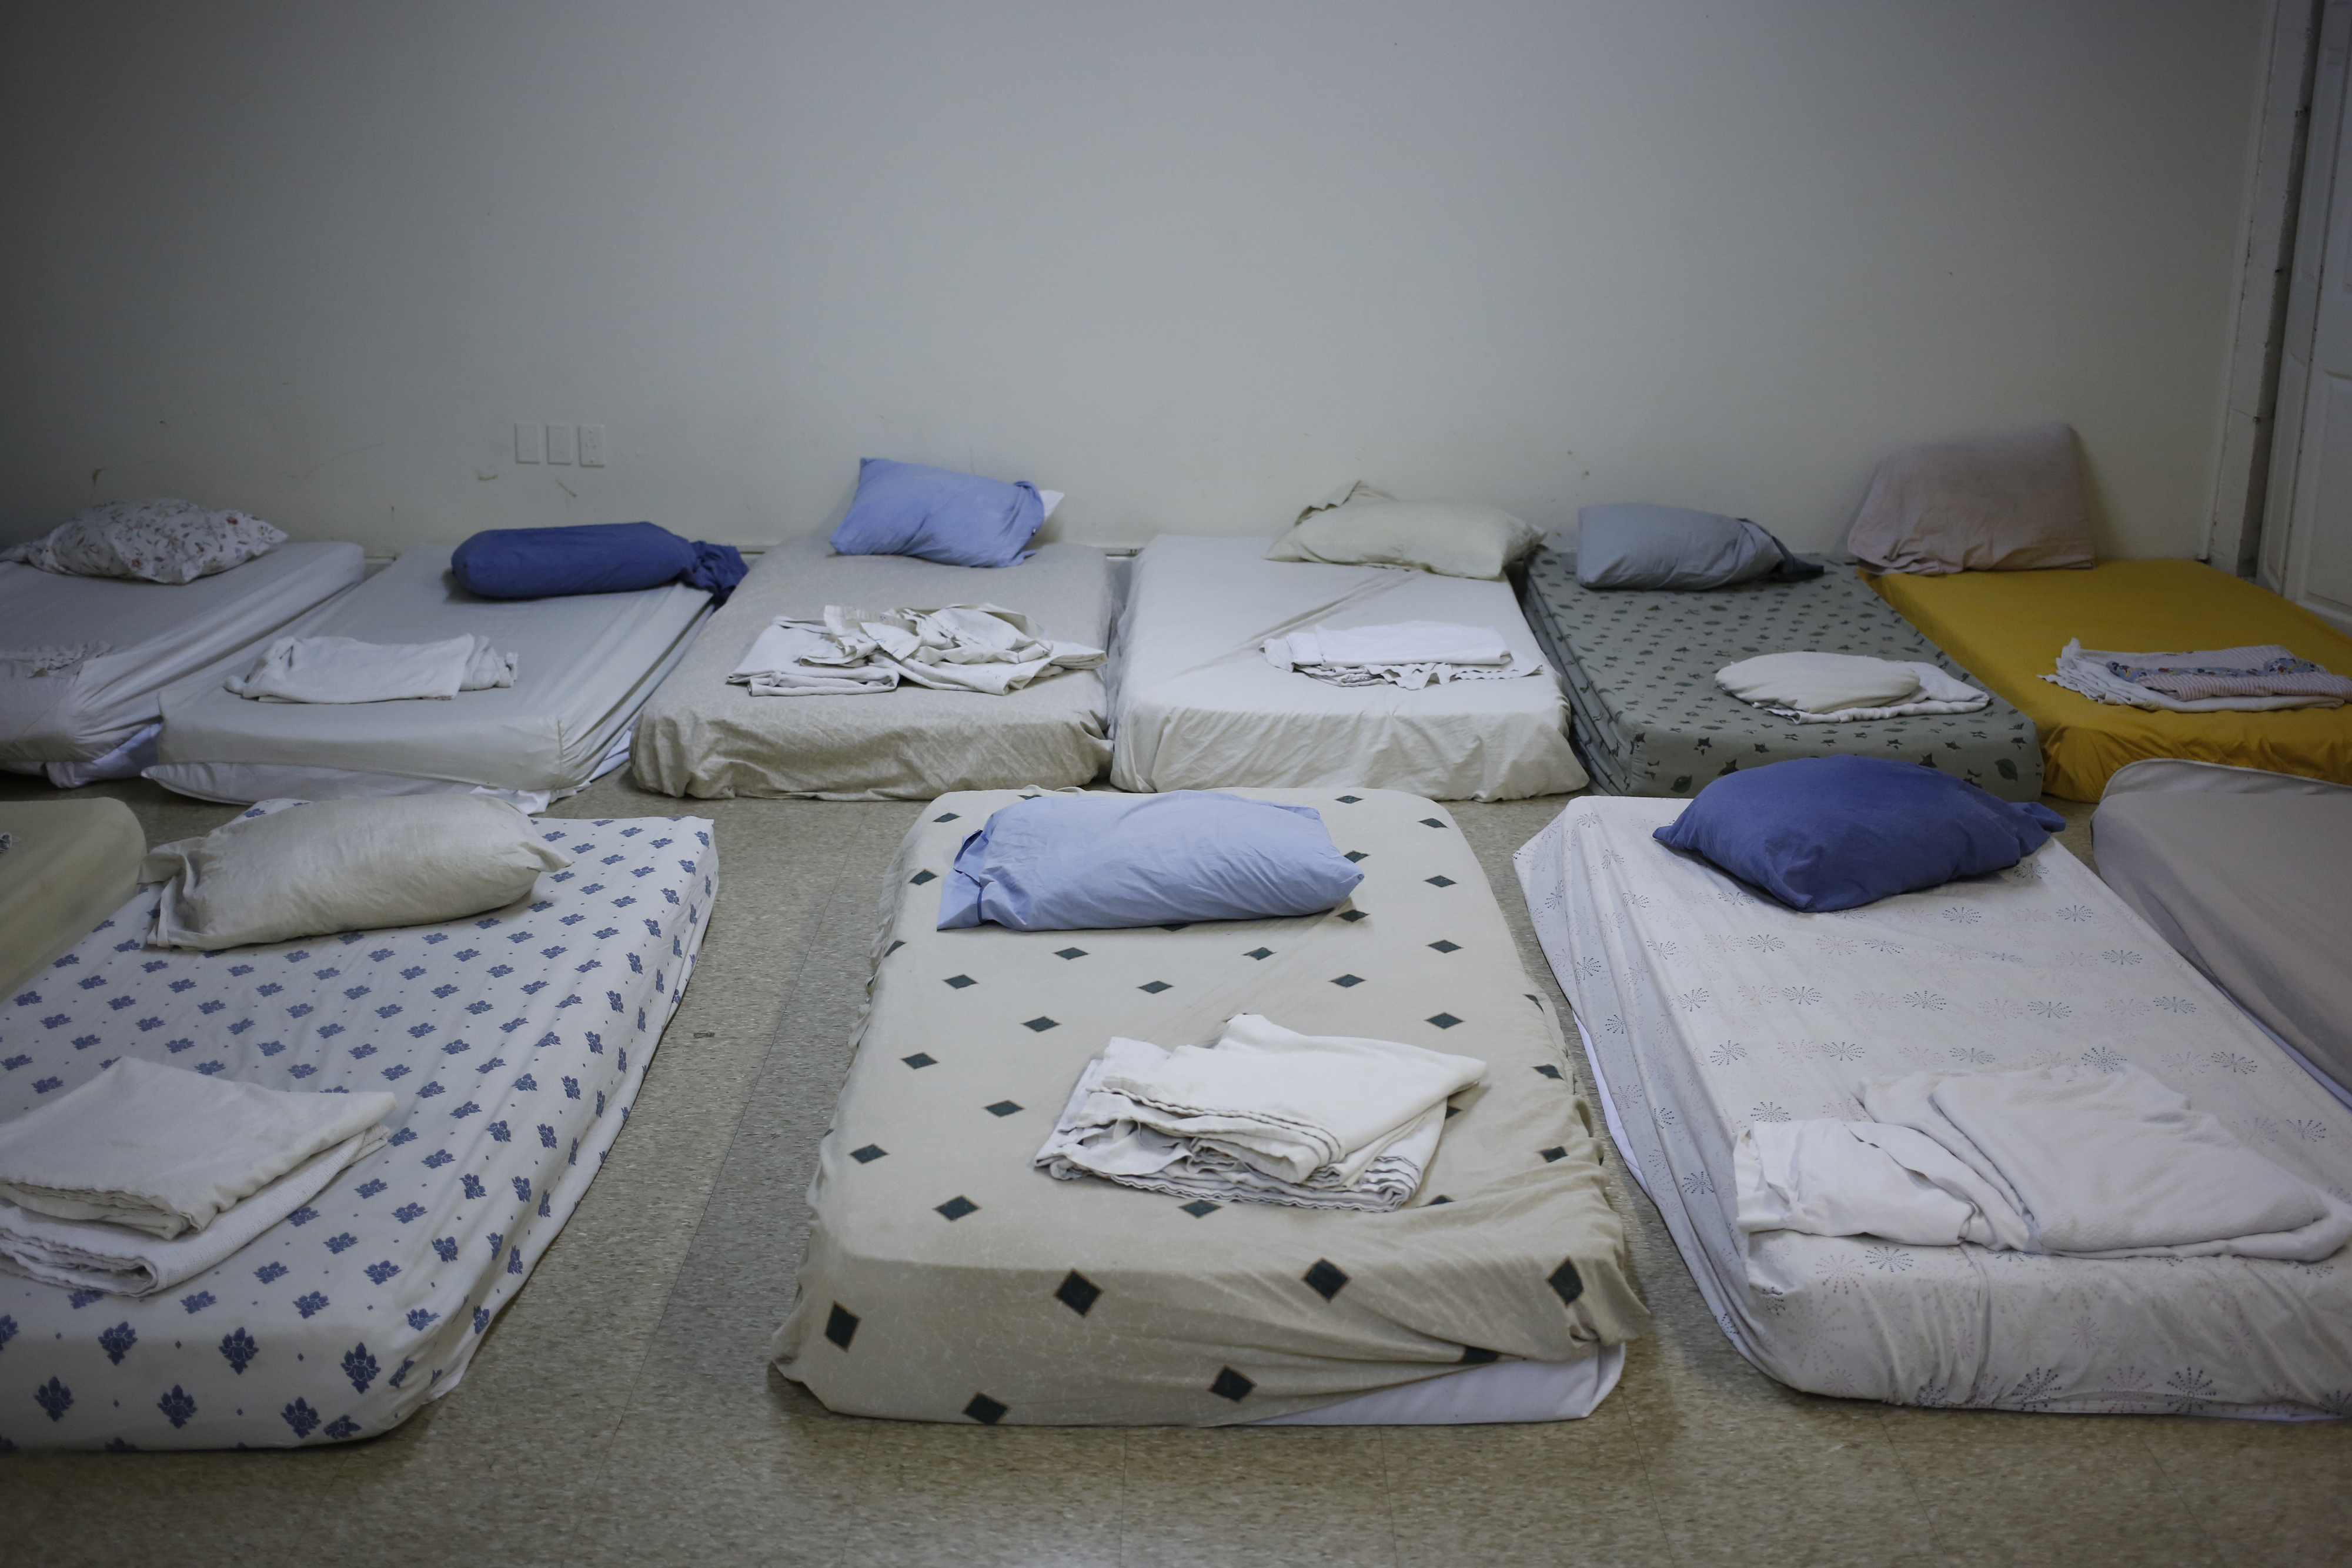 Beds for the homeless are prepared inside the Community Inn homeless shelter in Lexington, KY on Nov. 19, 2013. (Bloomberg/Getty Images)